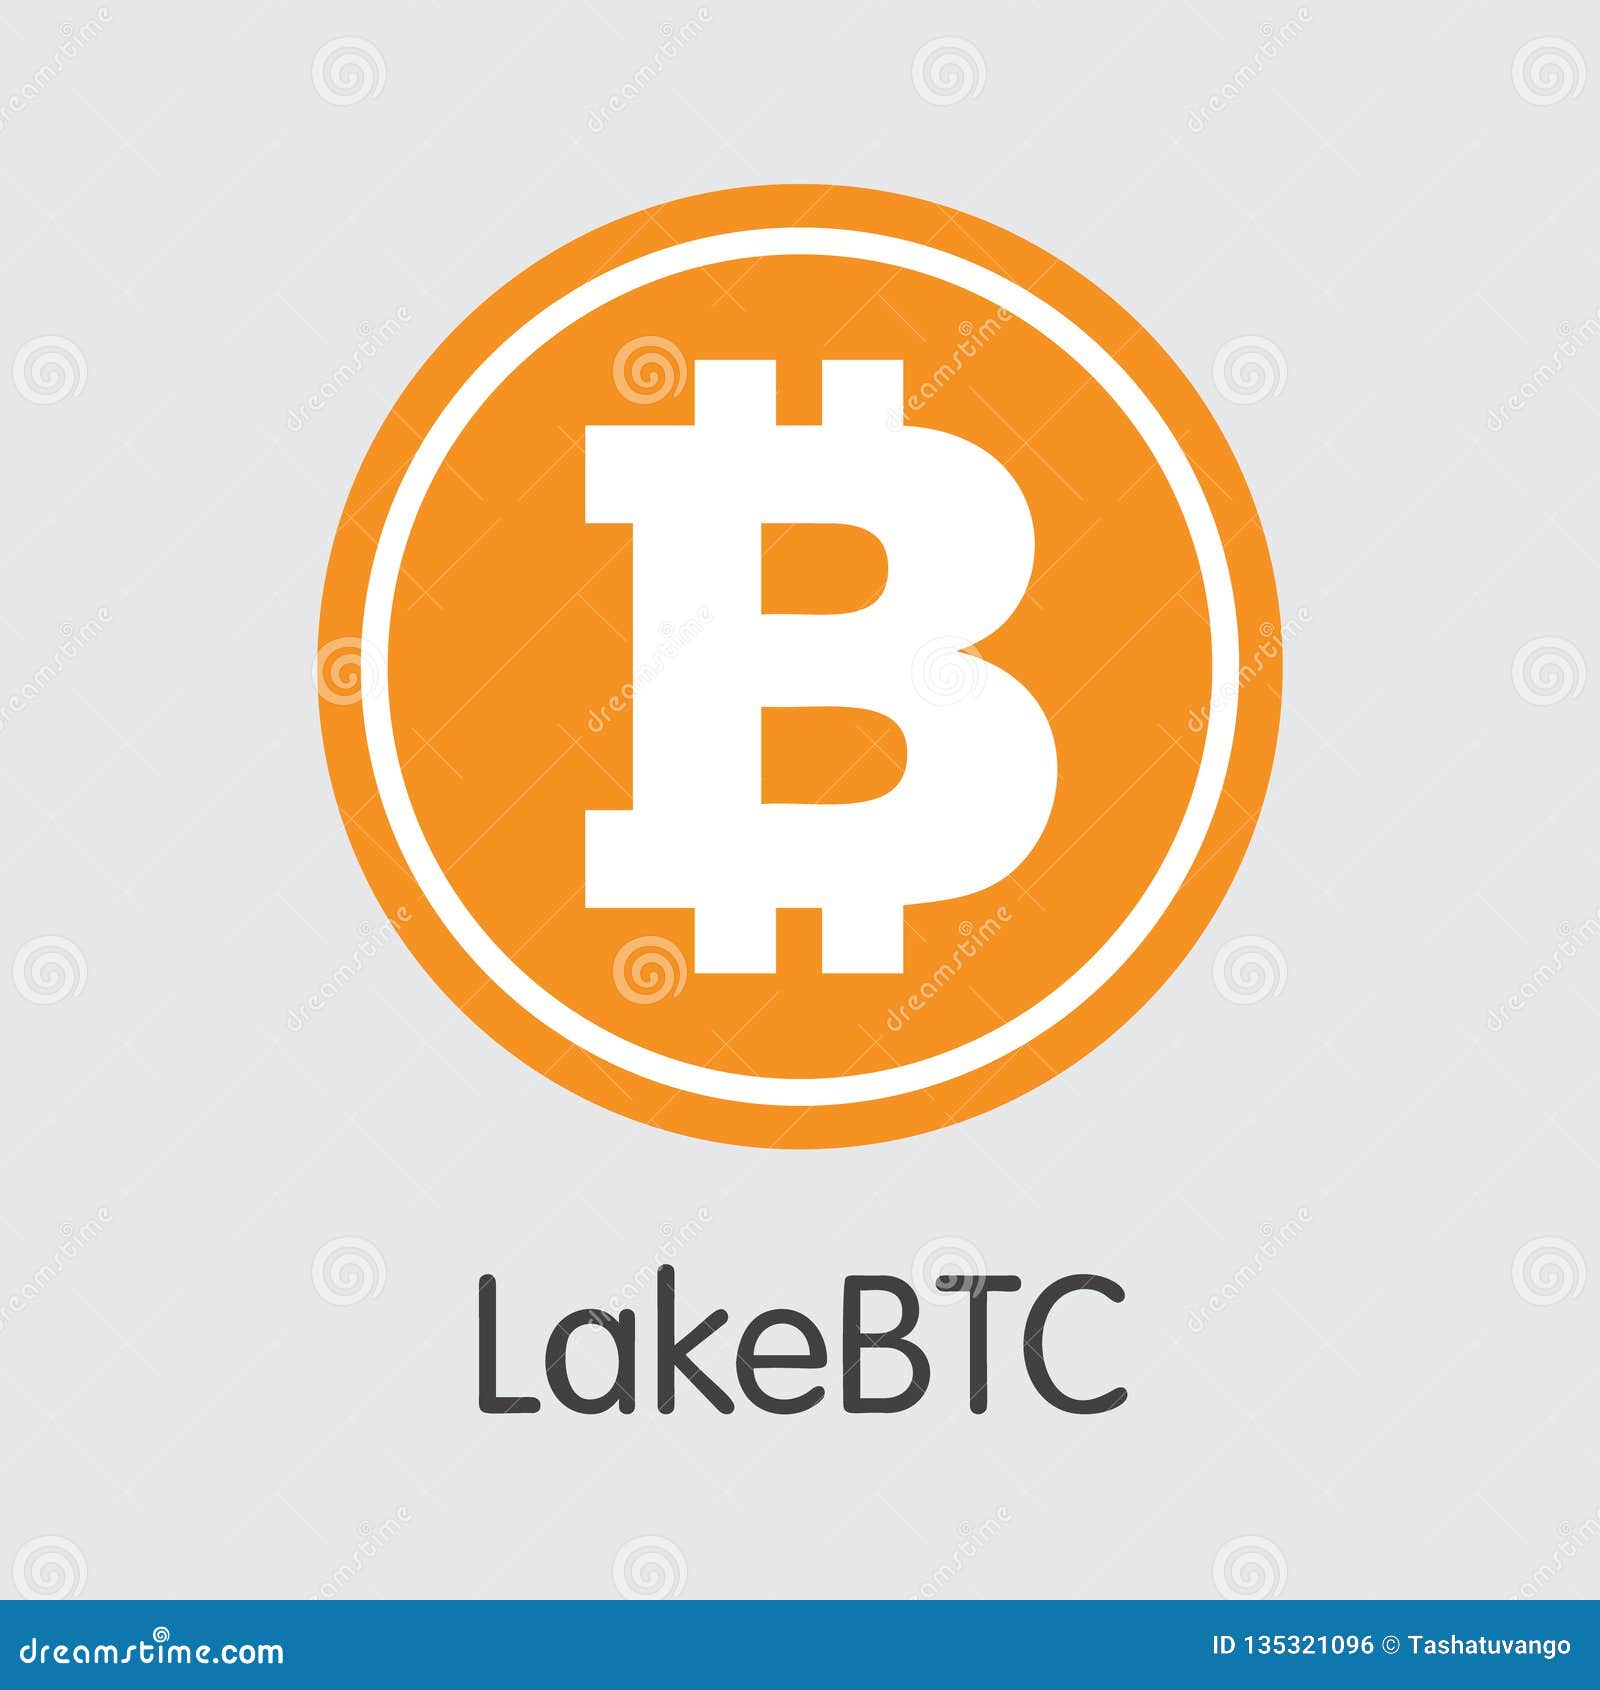 lake crypto exchange